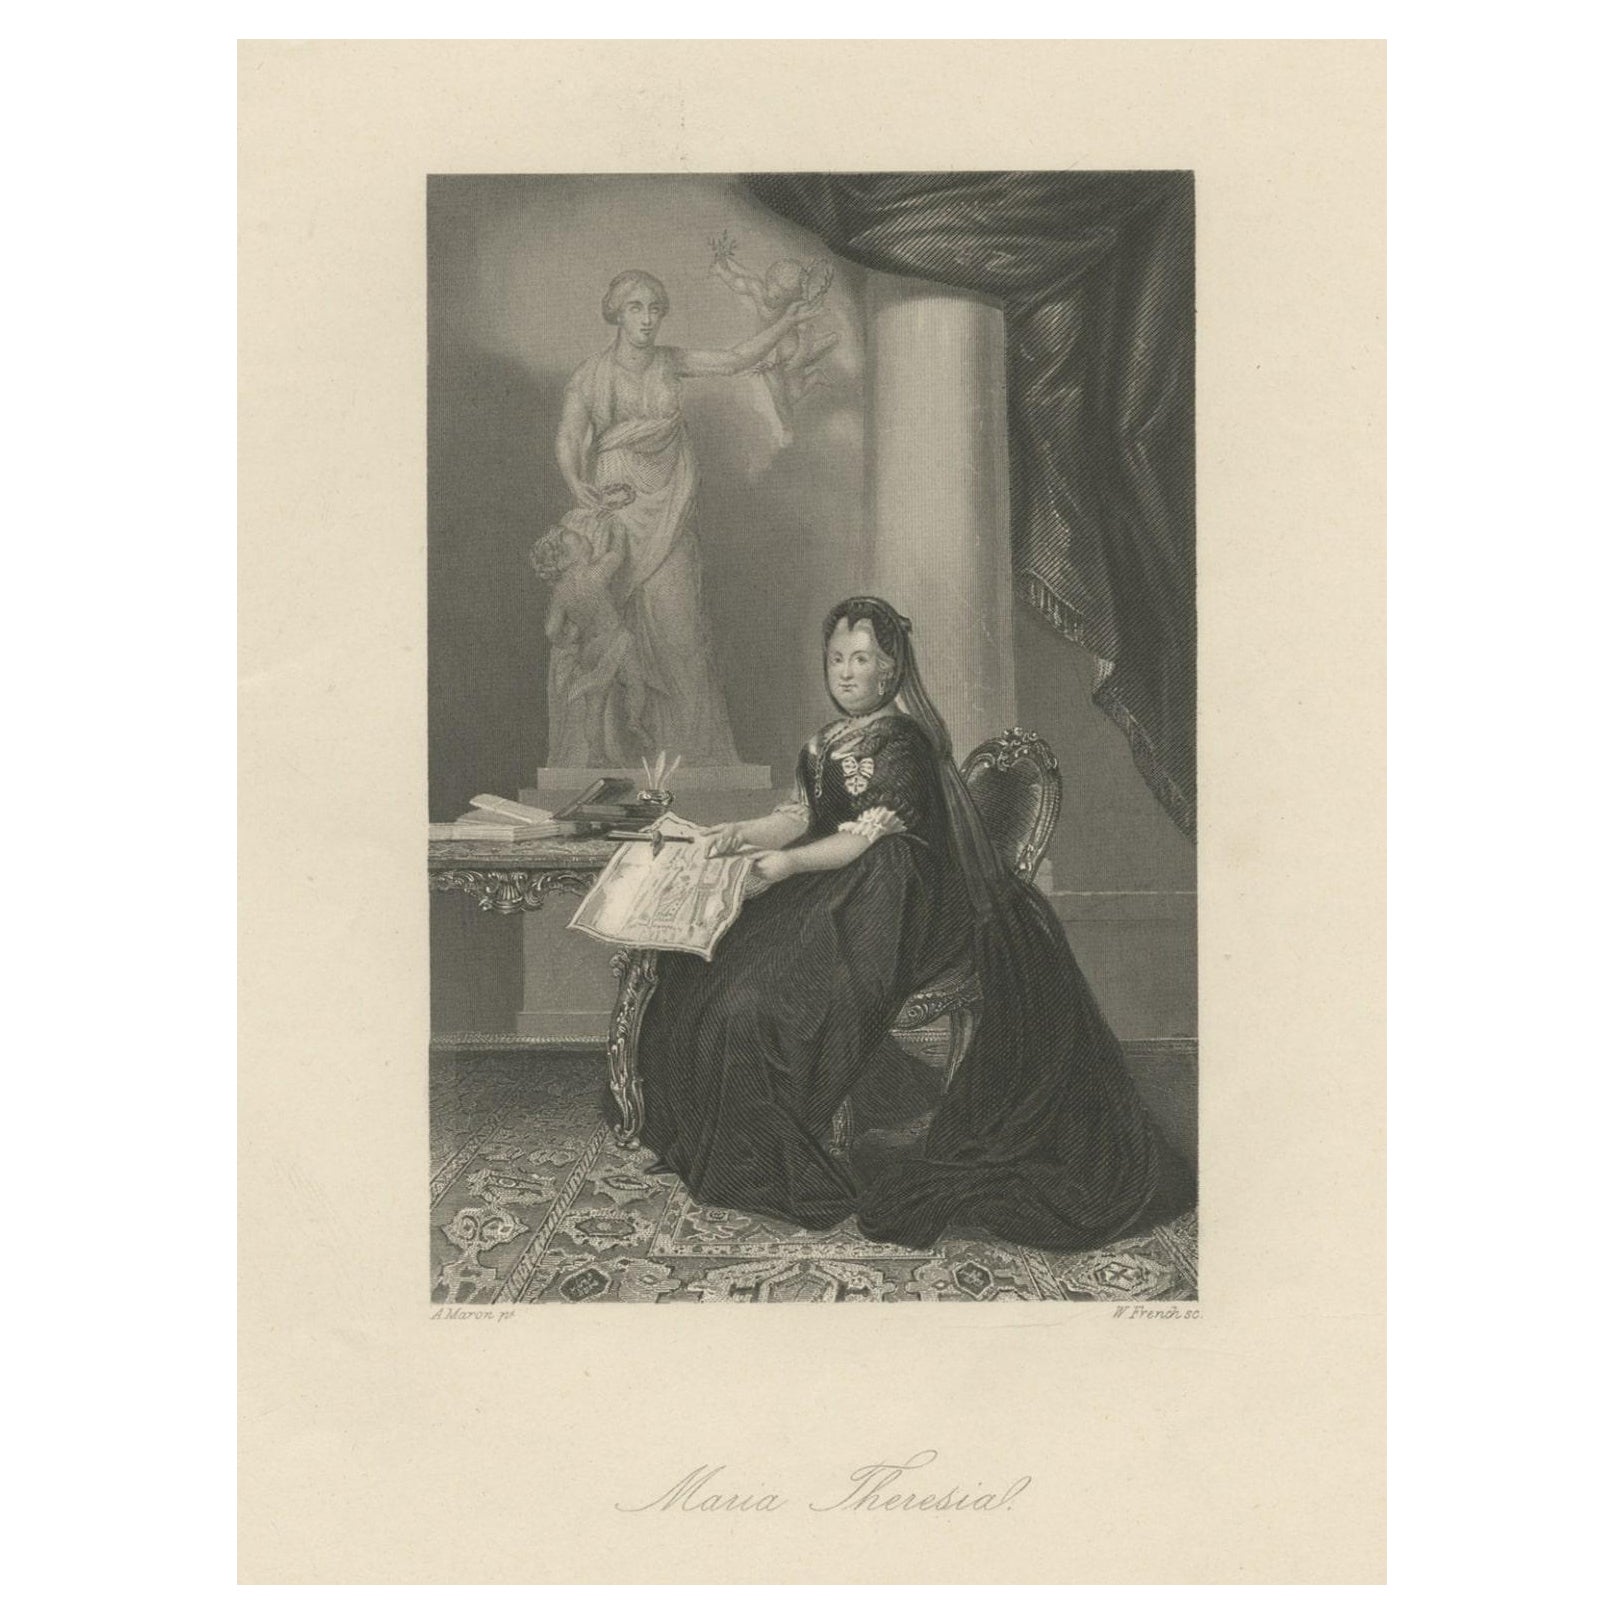 Altes Porträt des Habsburger Herrschers Maria Theresa Walburga Amalia Christina, um 1850 im Angebot